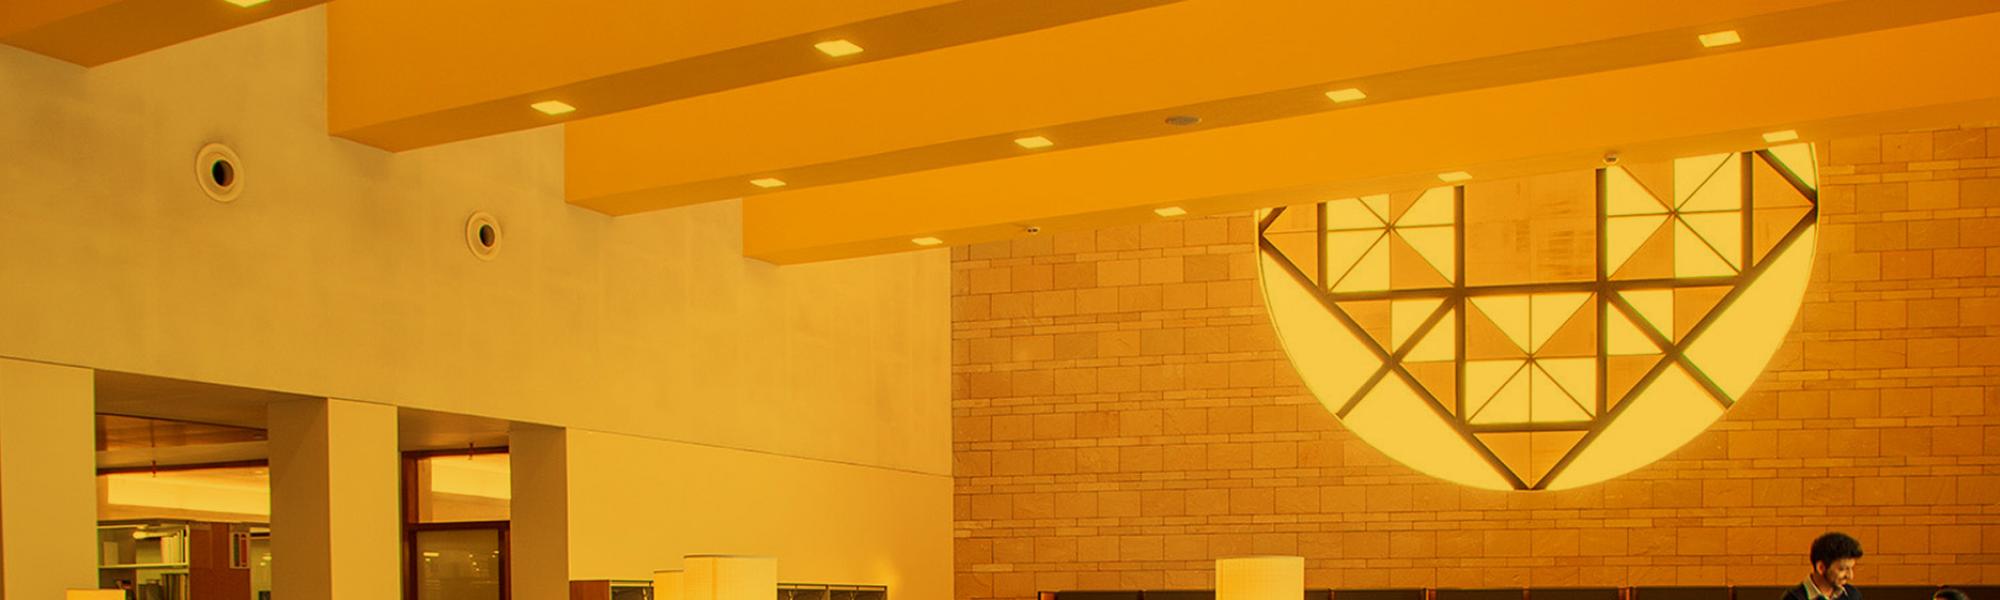 Qatar Library Interior